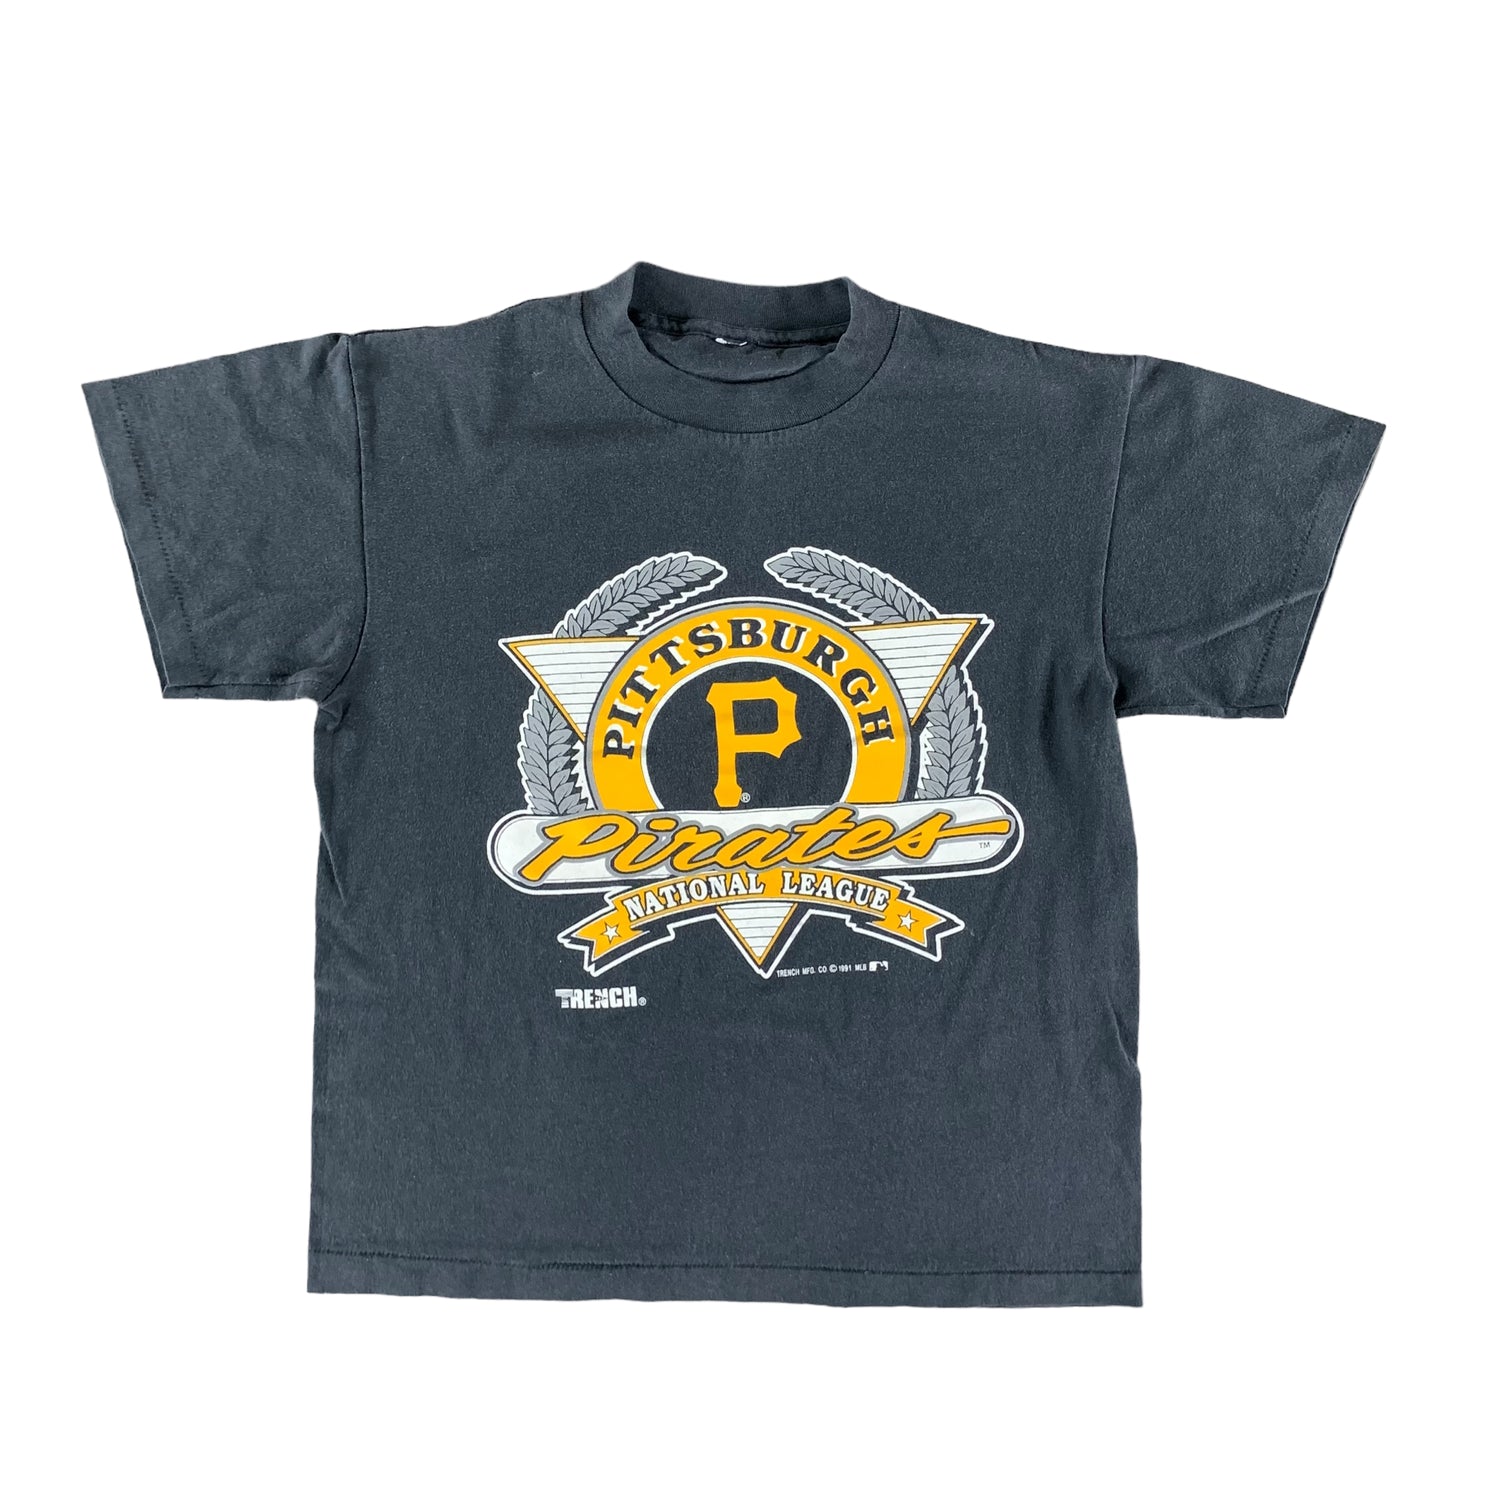 Vintage 1991 Pittsburgh Pirates T-shirt size Large